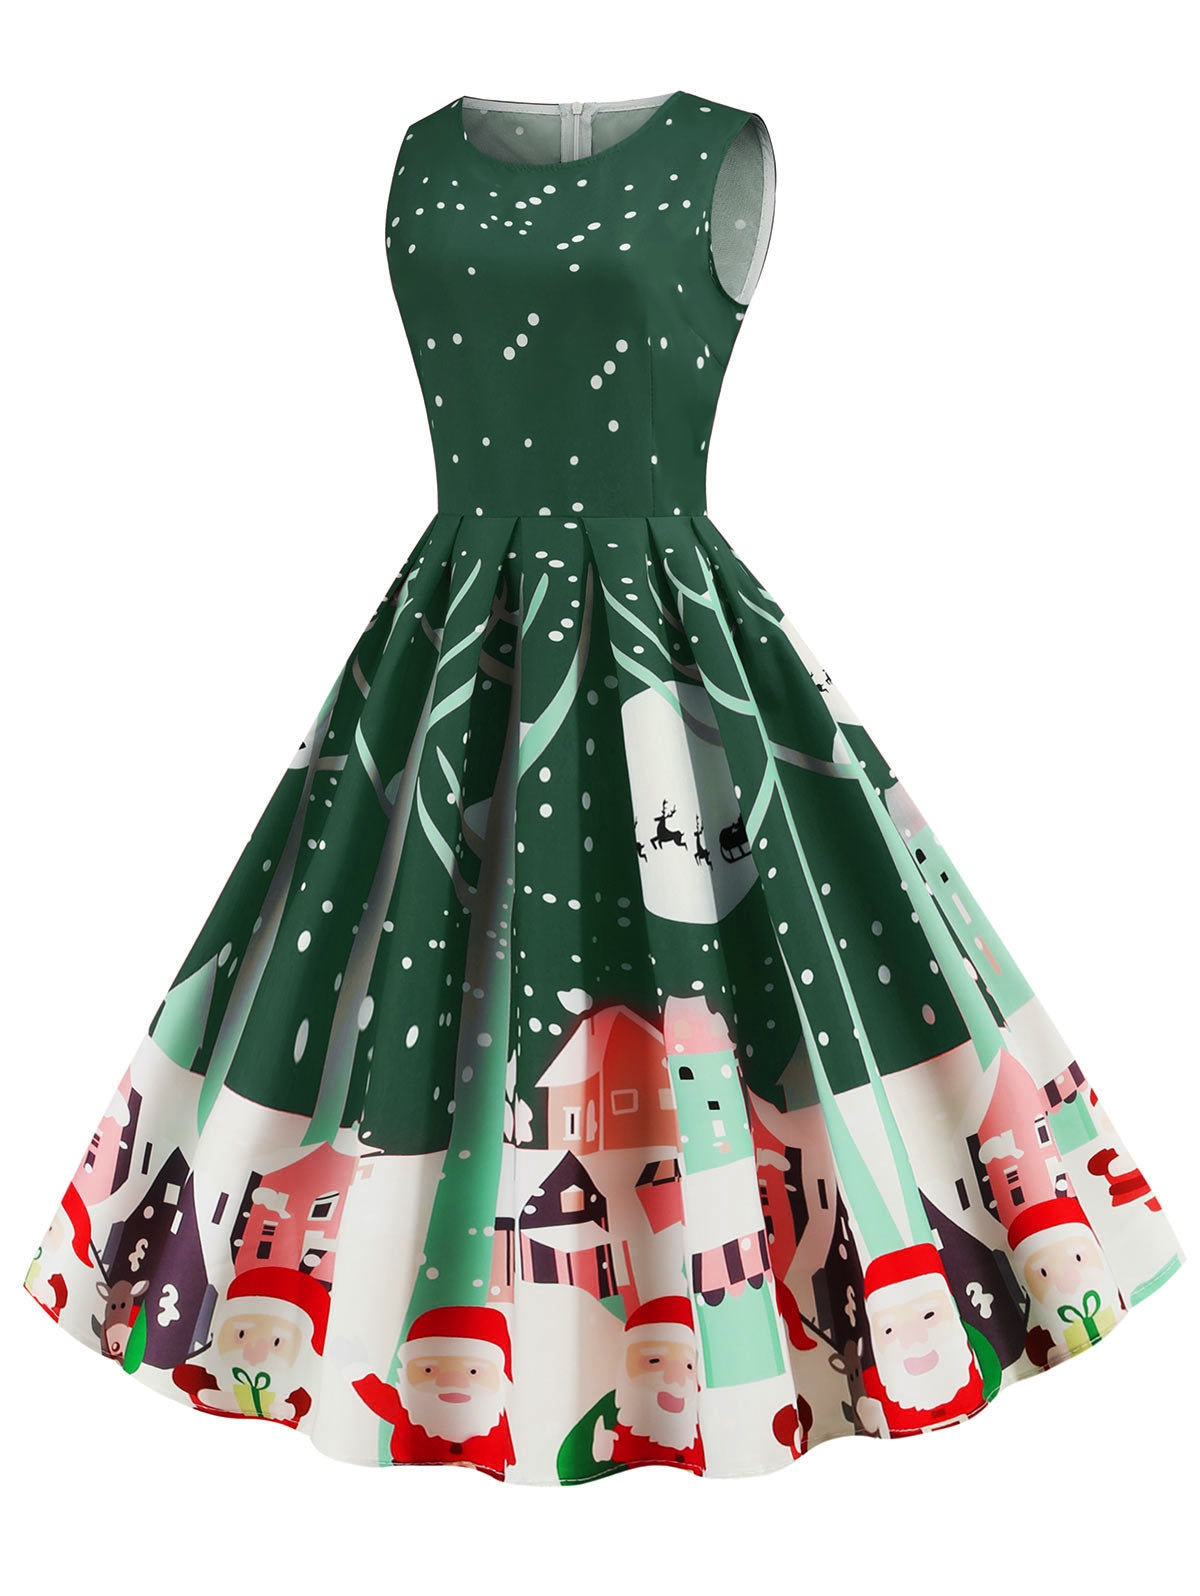 Santa Claus Snowflake Reindeer Christmas A Line Dress